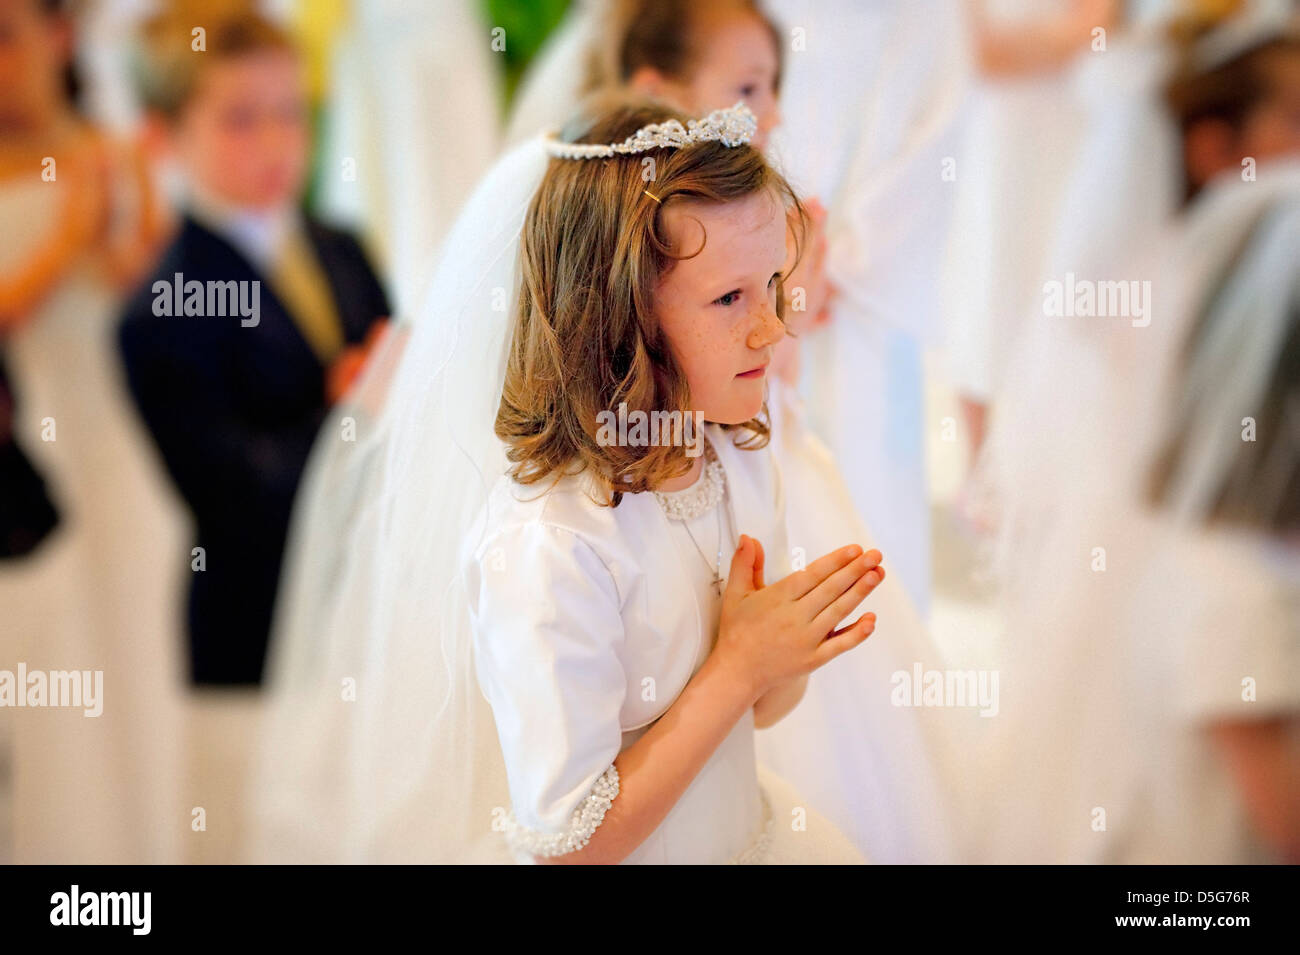 Girl receiving the sacrament of communion. Stock Photo